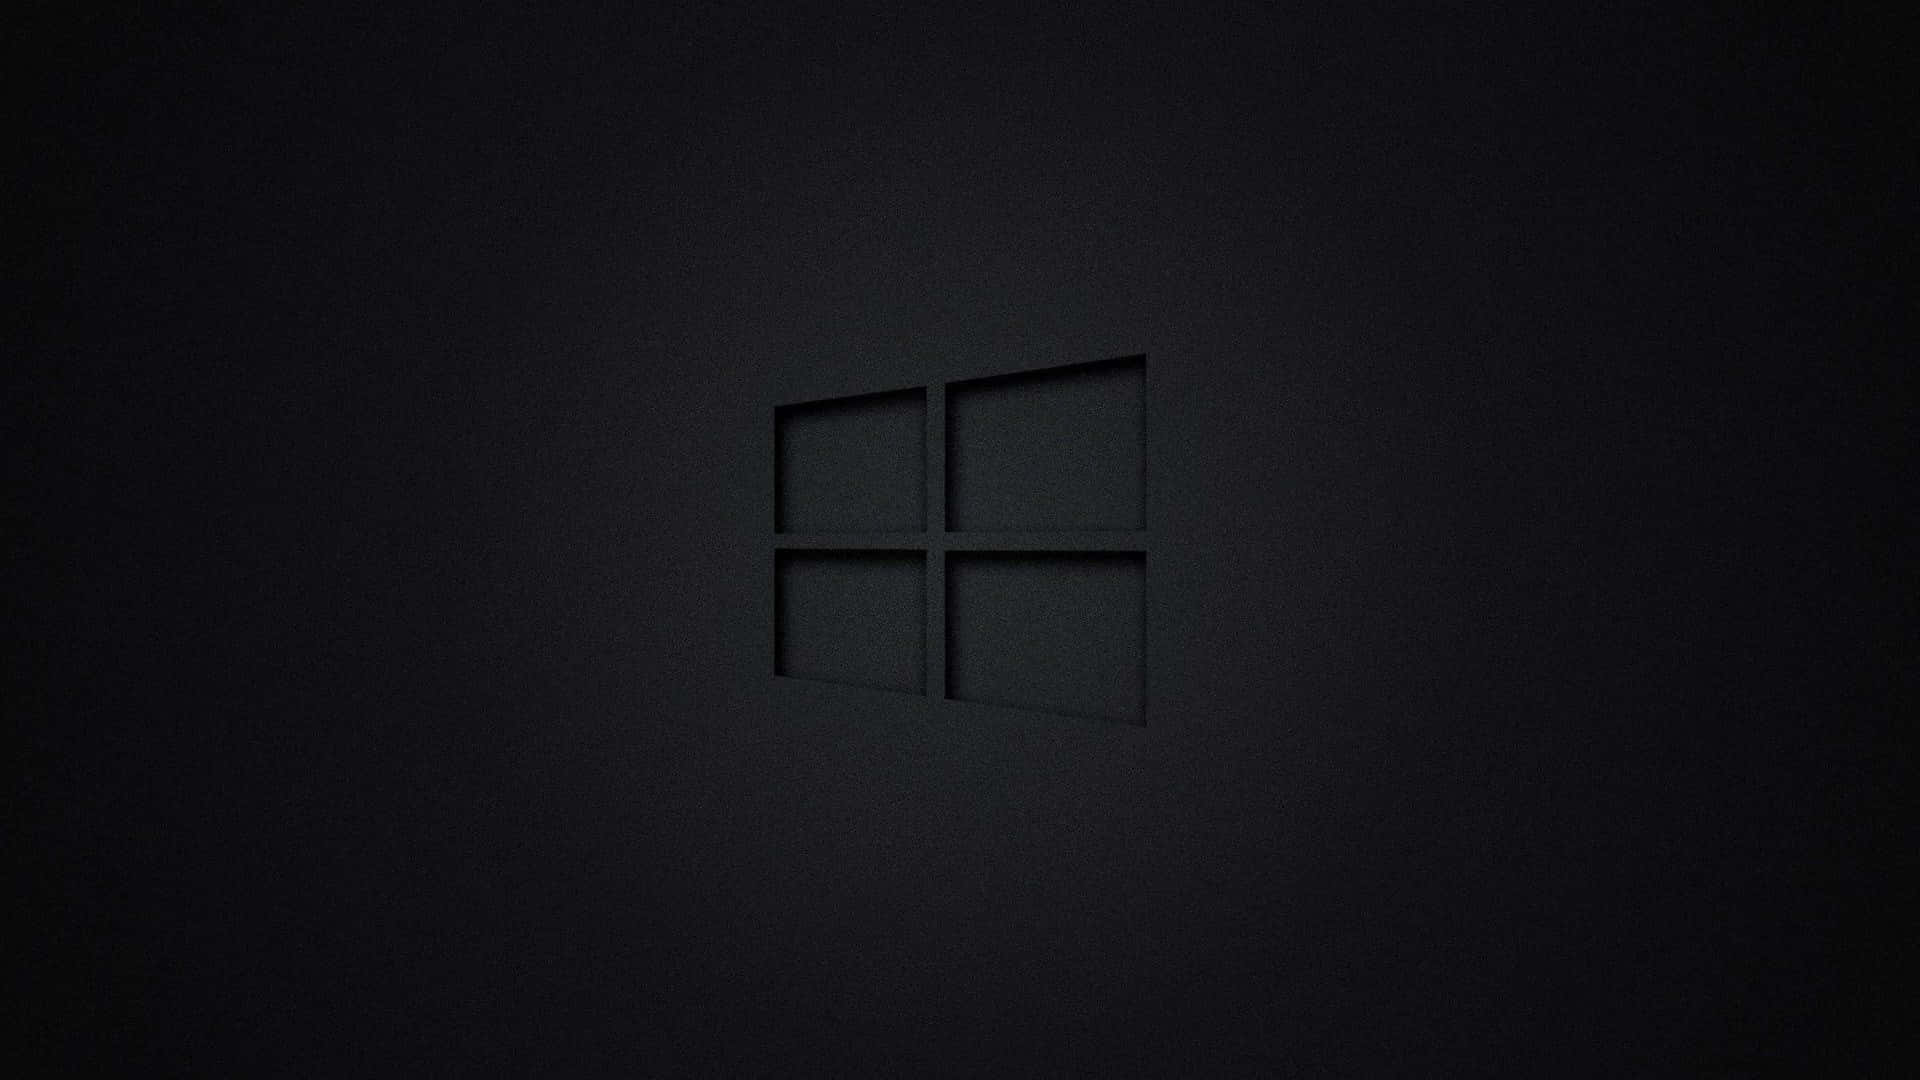 Windows 10 Logo In The Dark